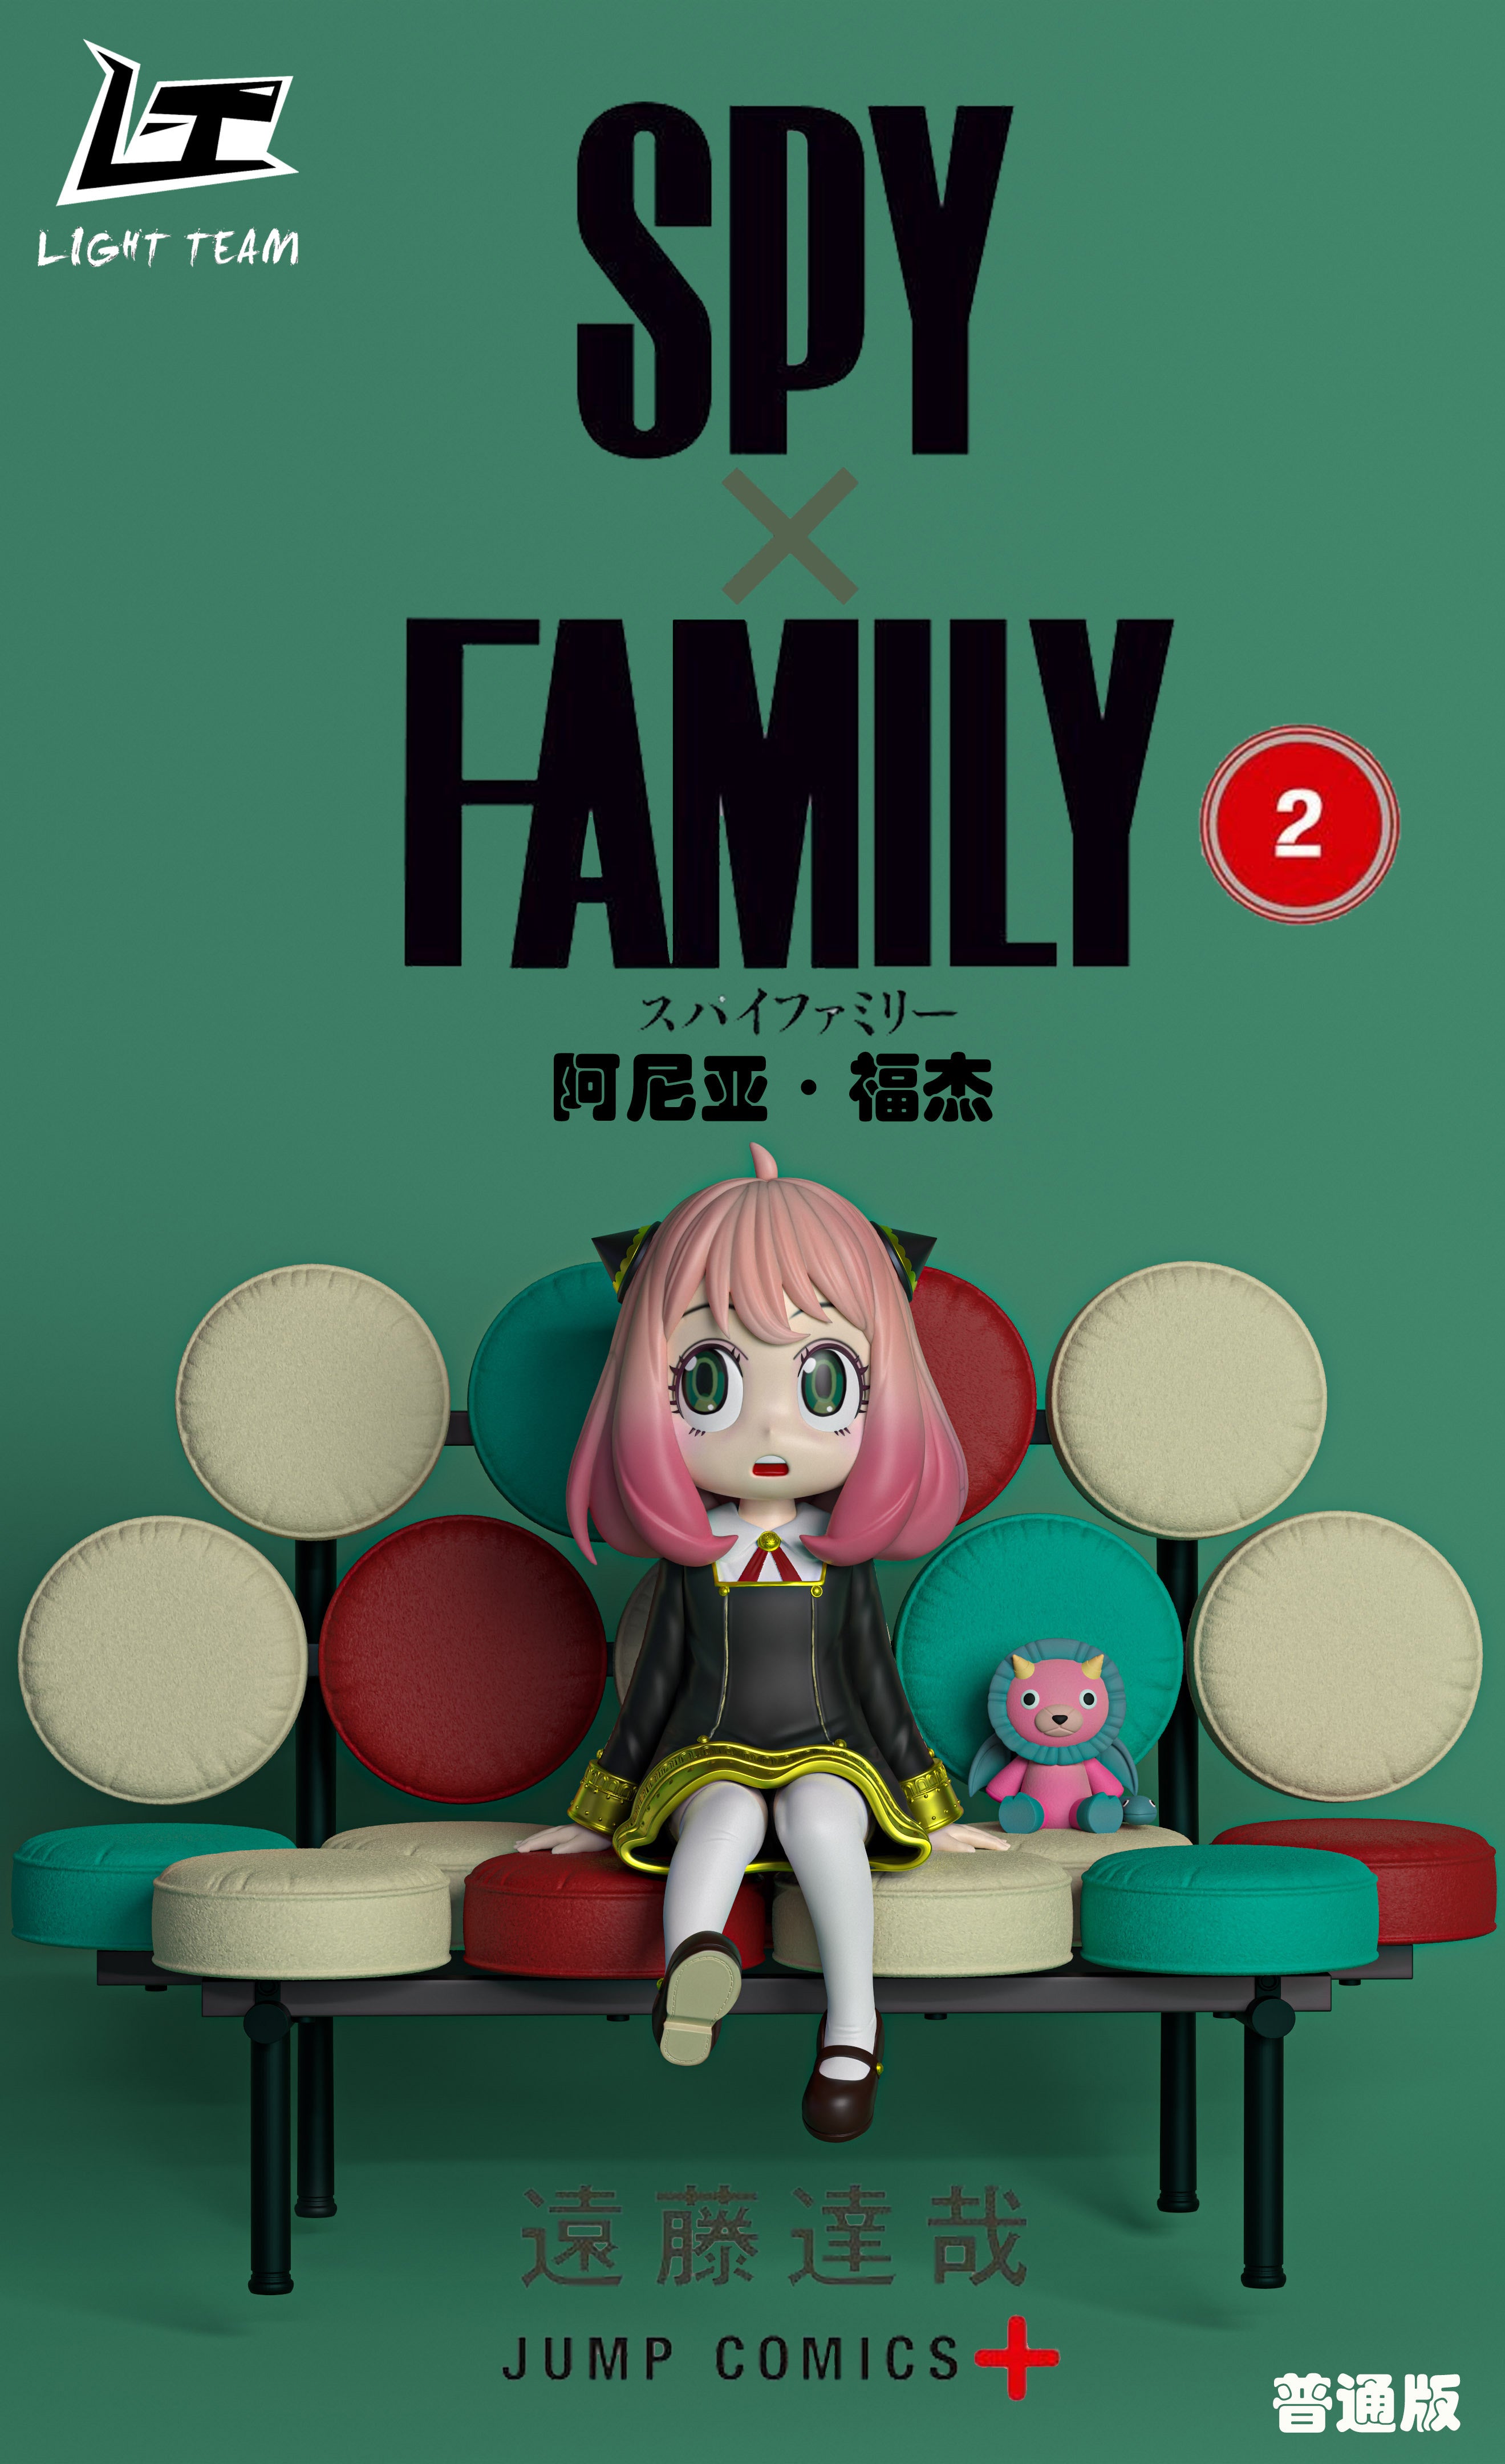 FAN - Uchiwa - Spy x Family (Anya x 2) - 1071 - Matcha Time Gift Shop